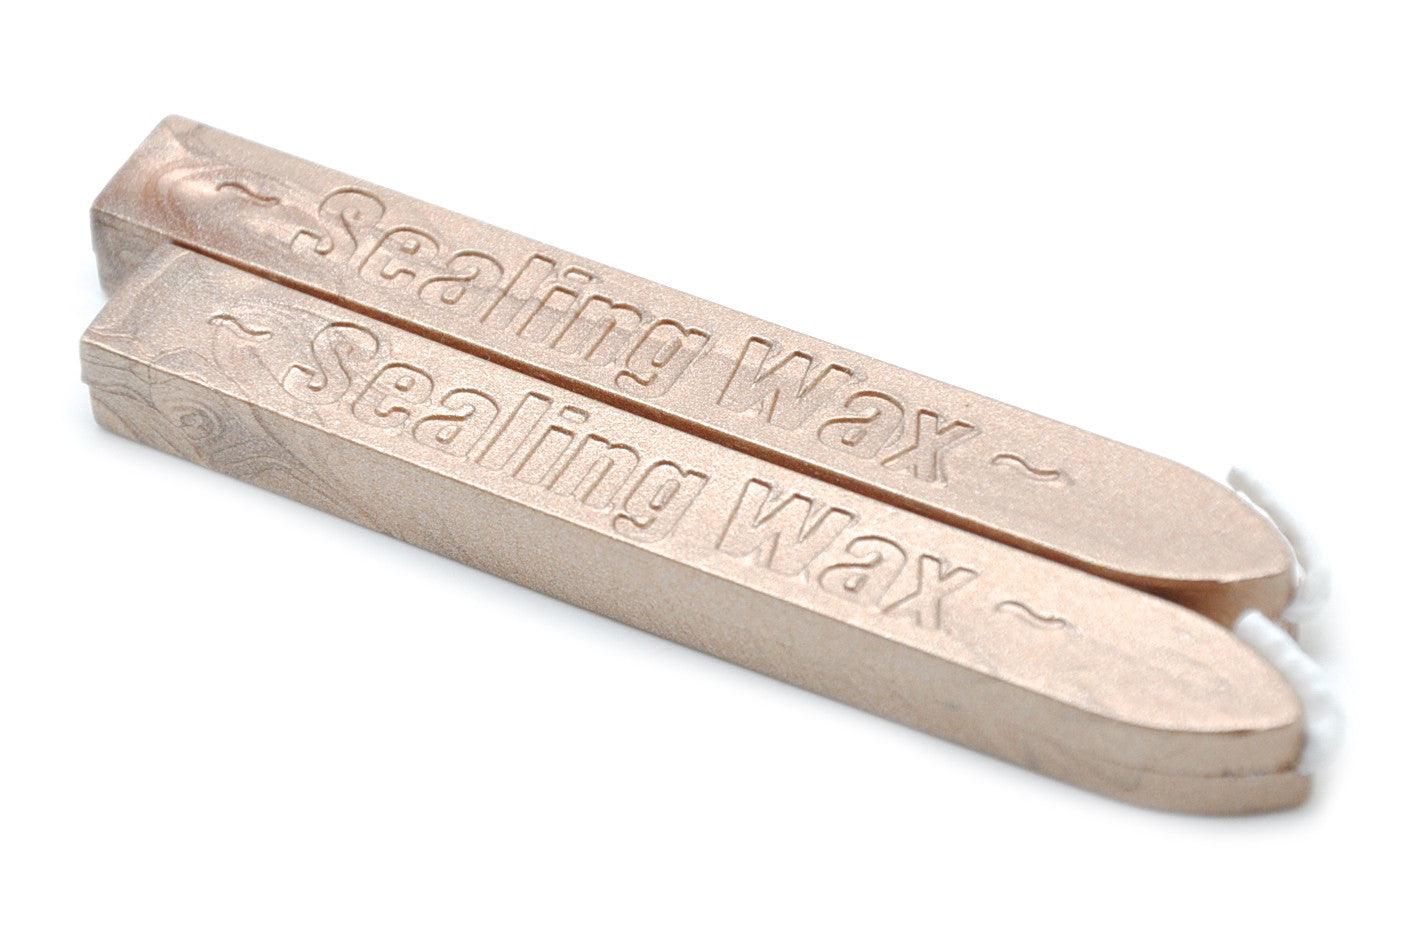 Dark Gold Non-Wick Filigree Sealing Wax Stick